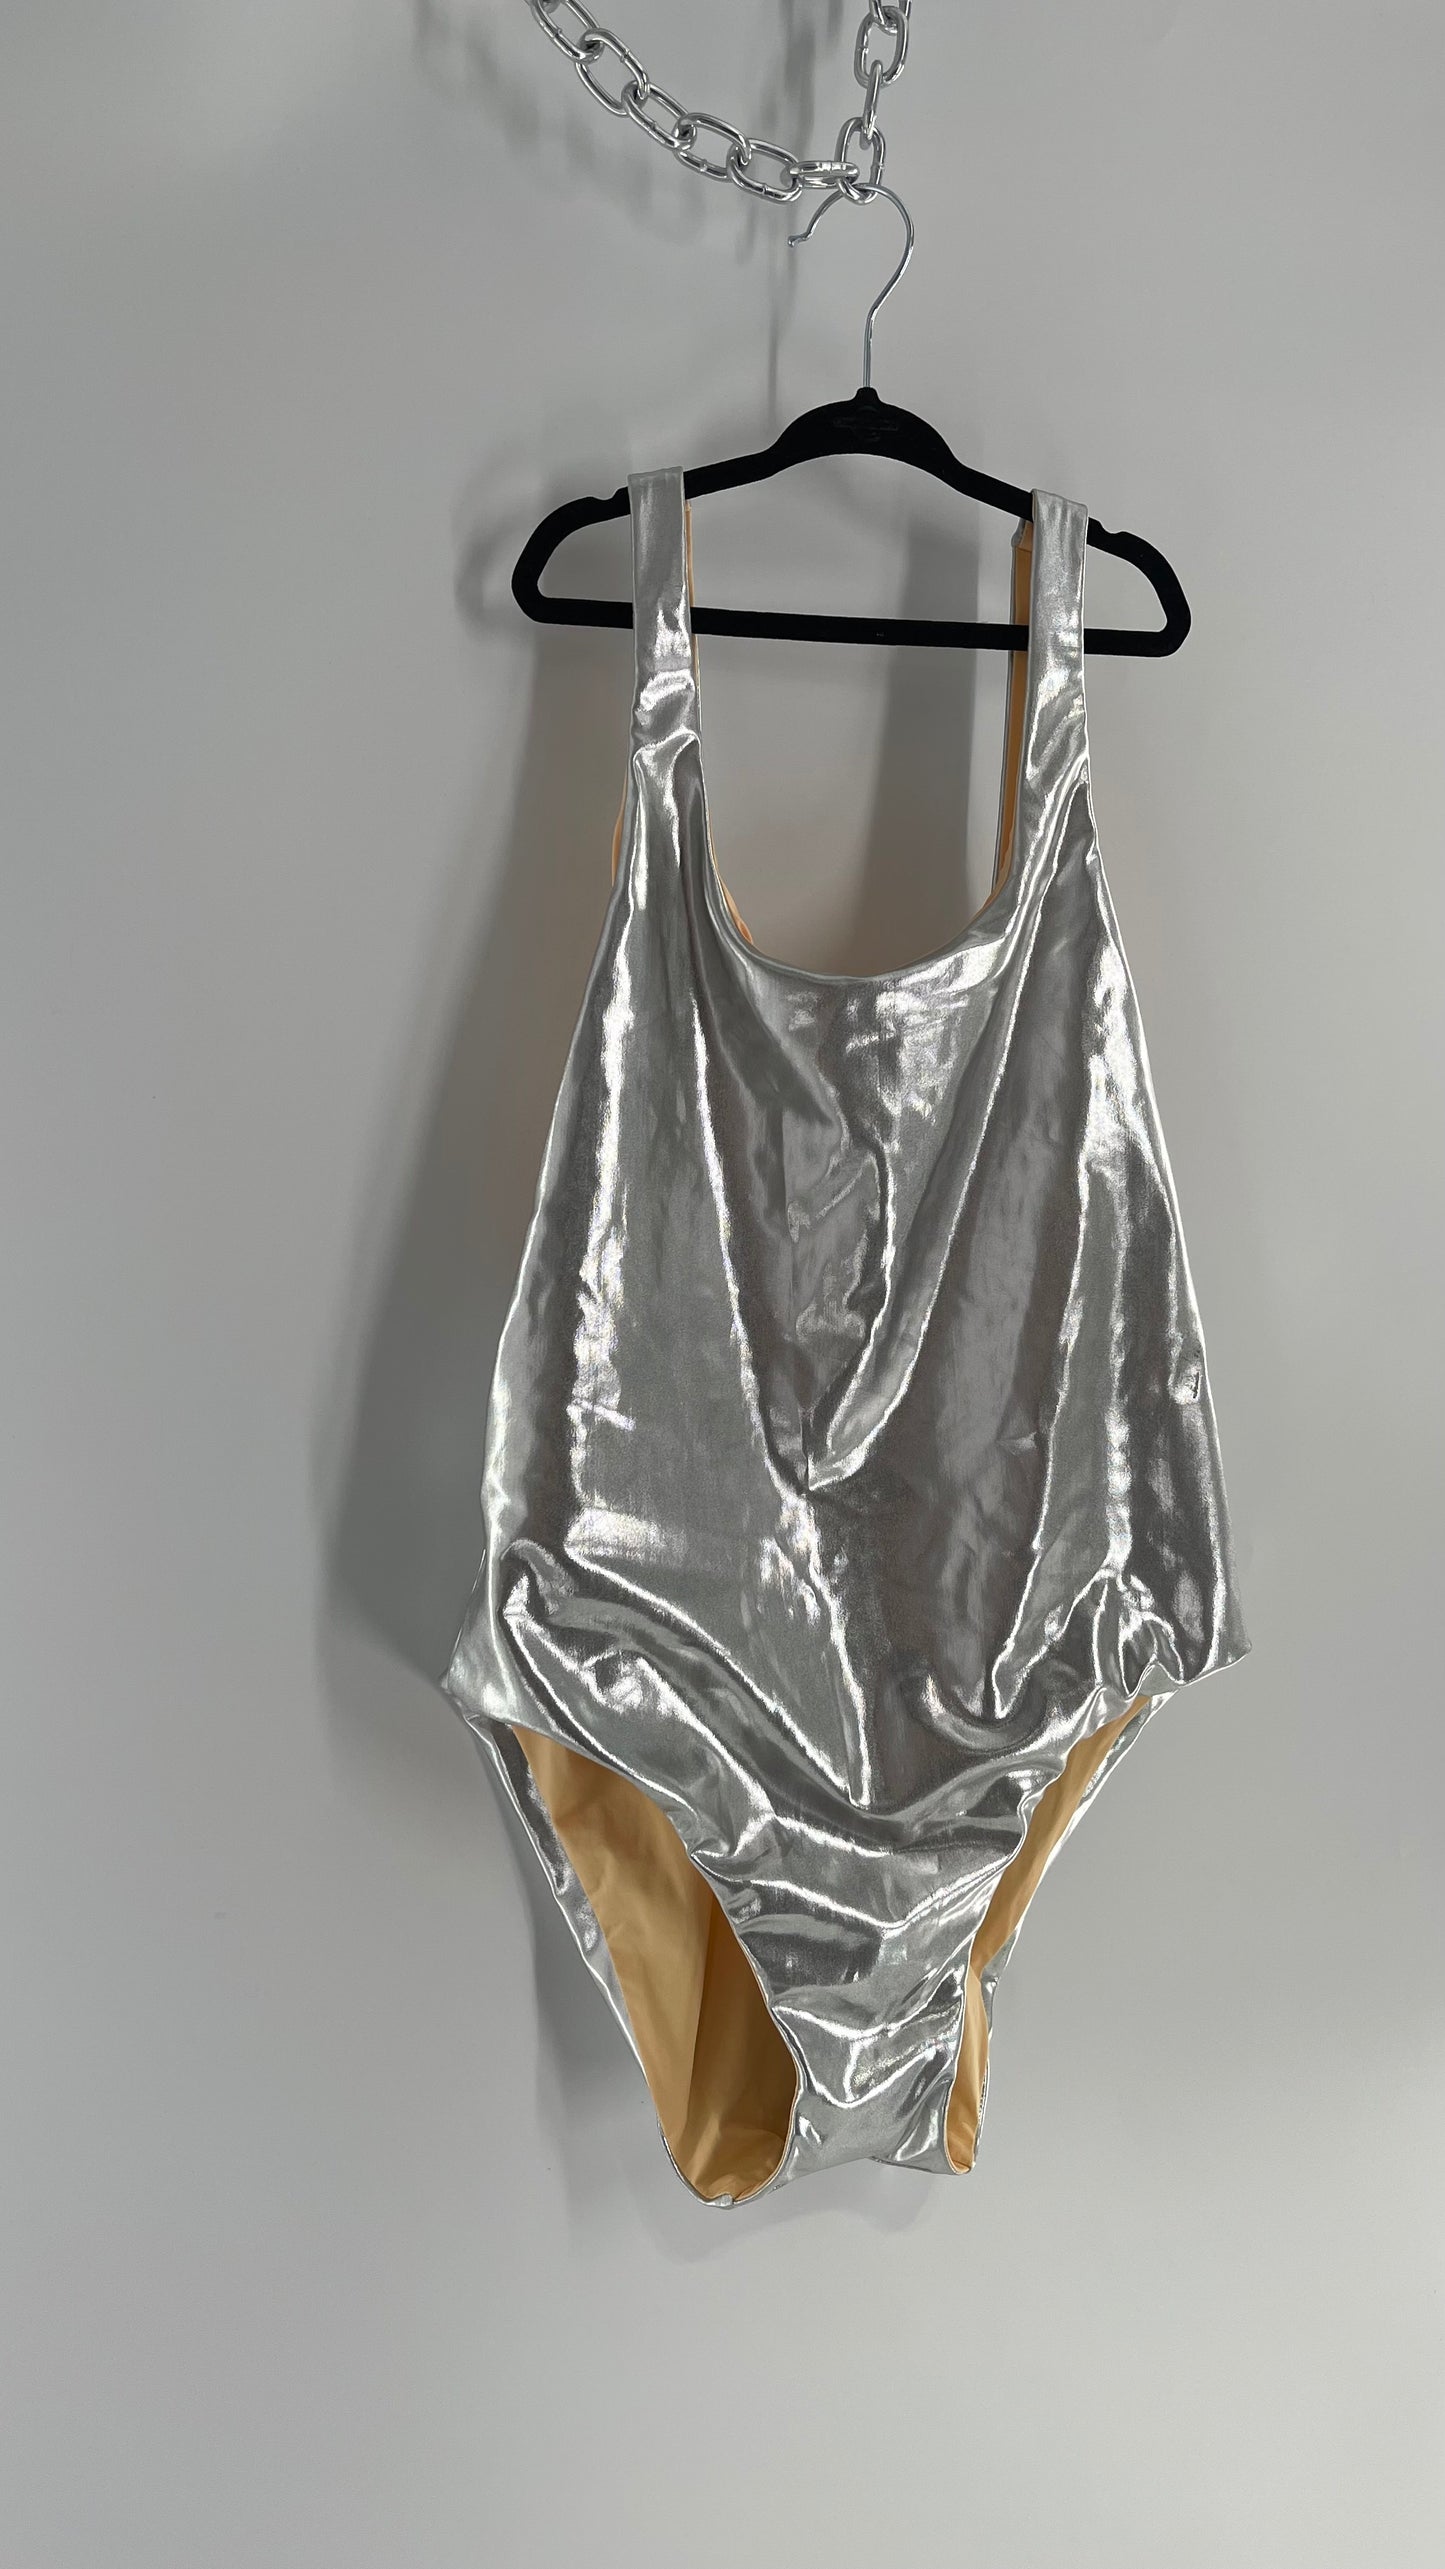 Dolce Vita Reversible Silver Metallic/Nude Swimsuit (Medium)